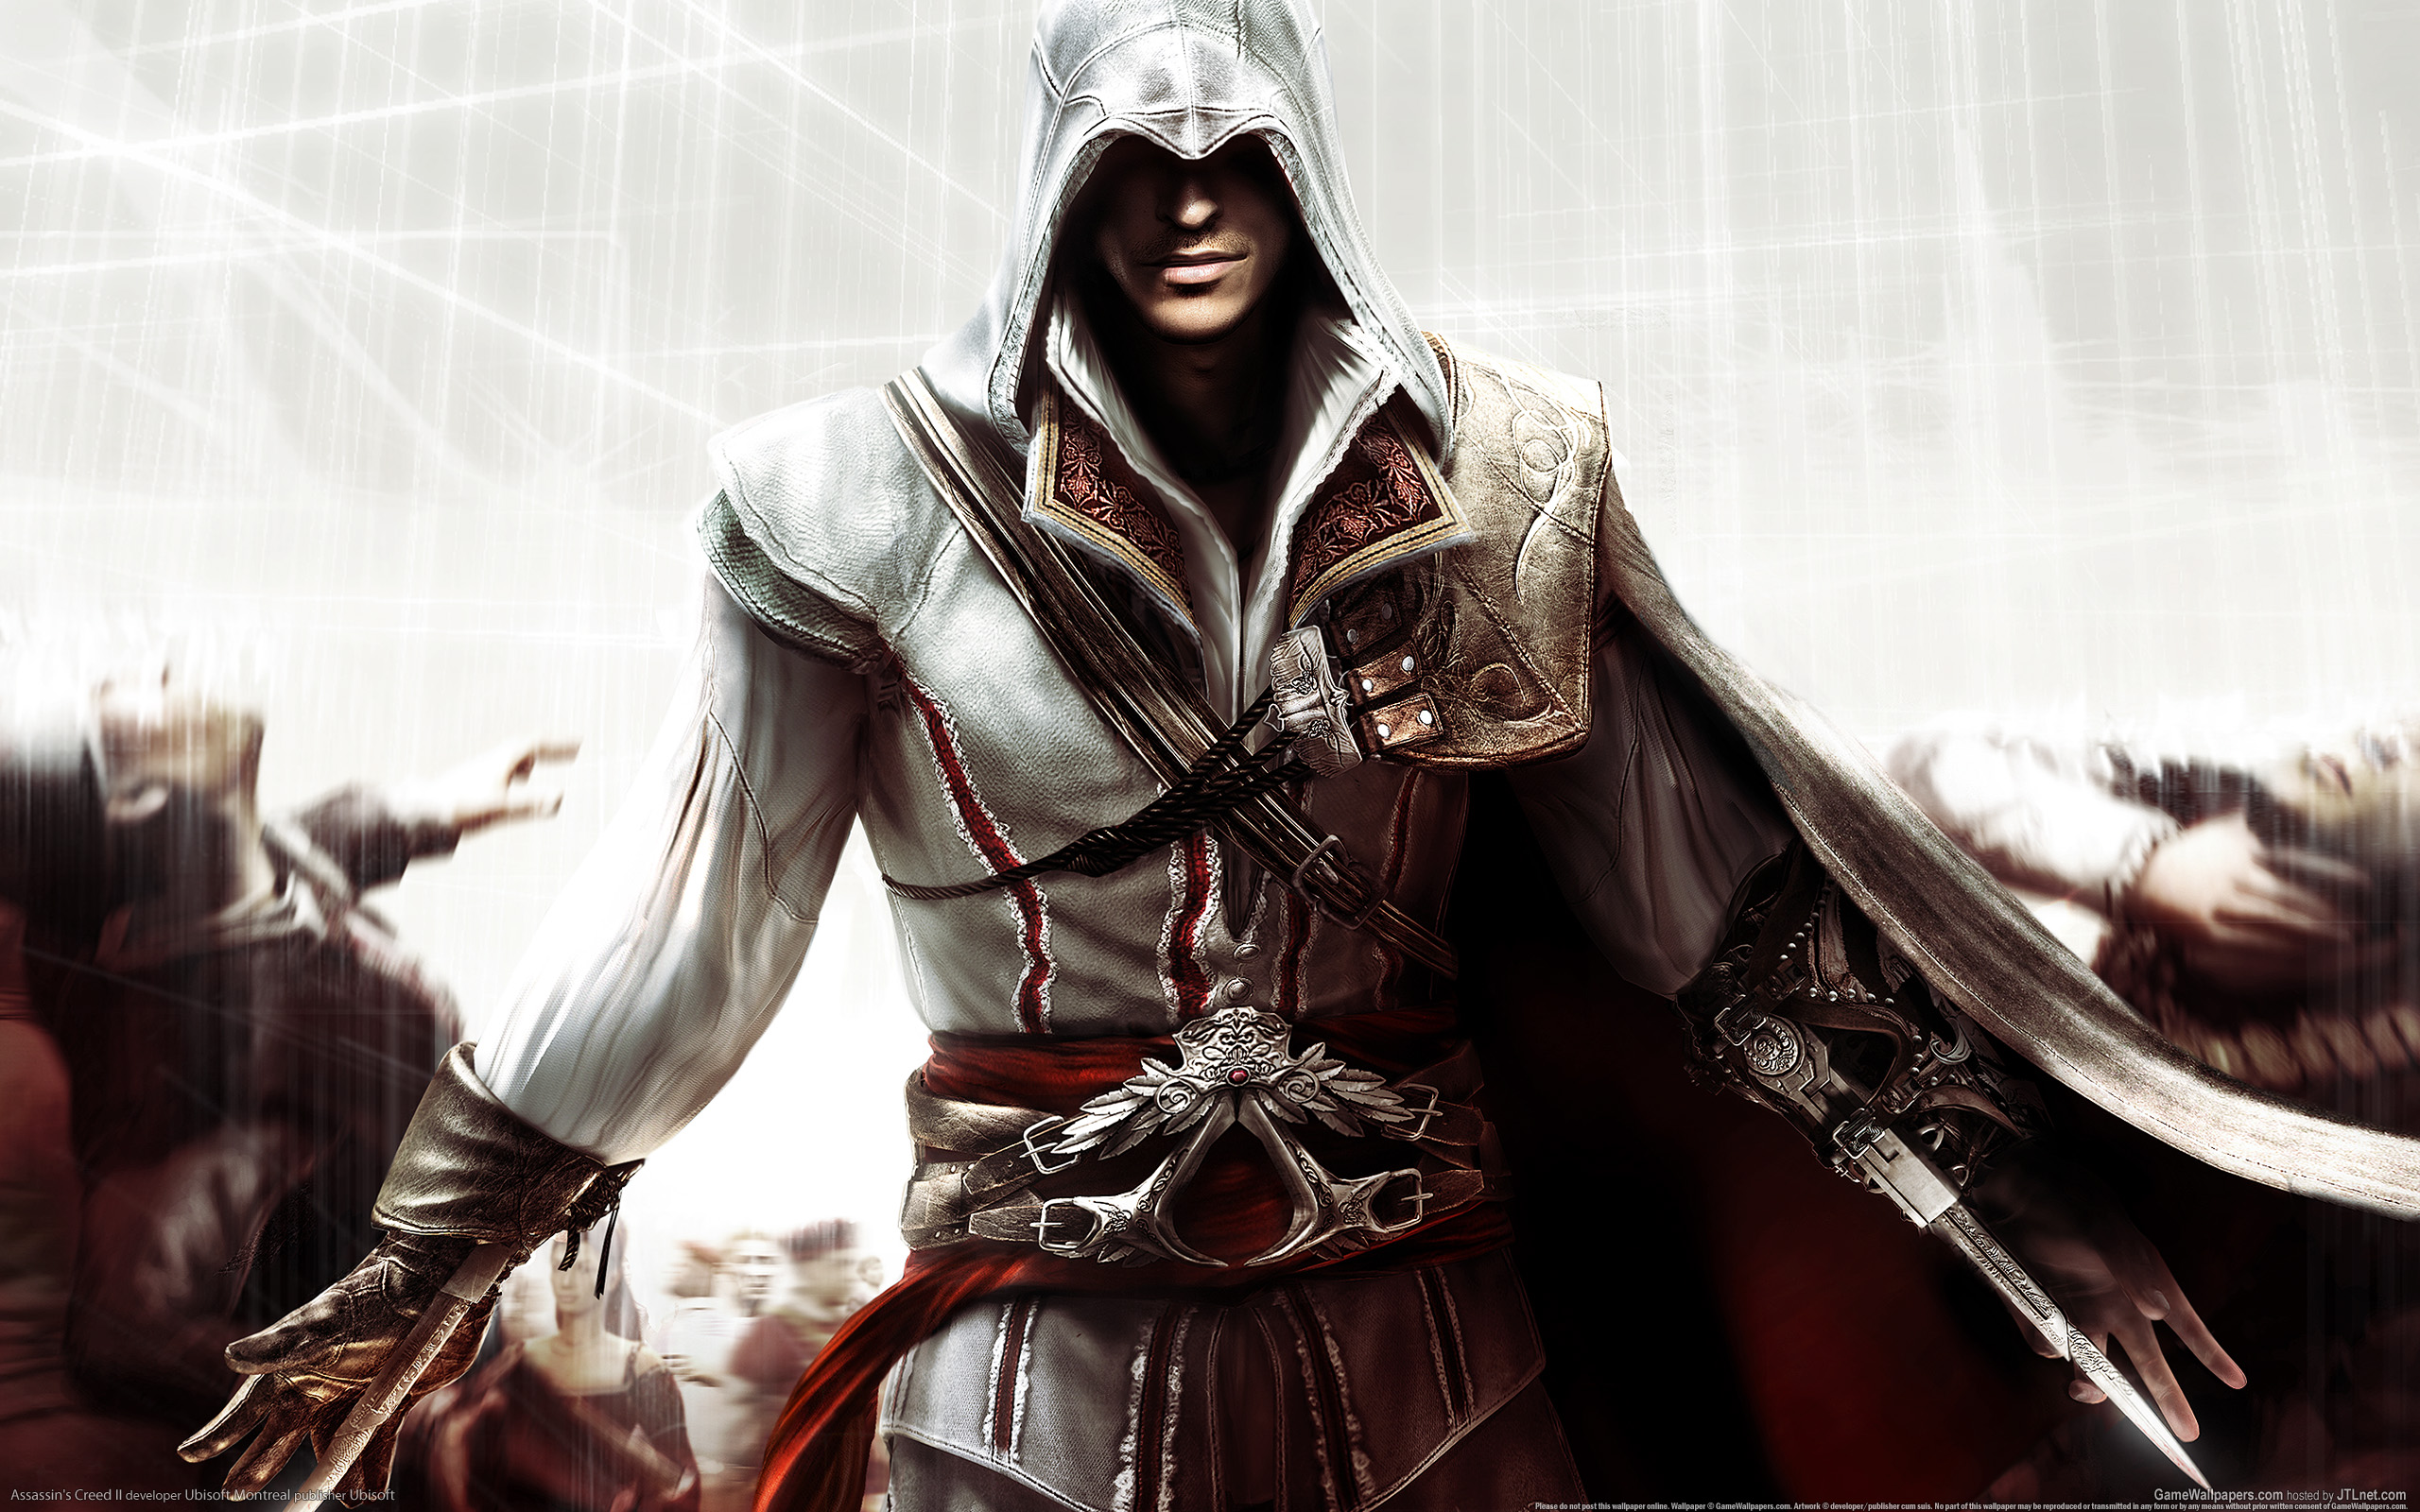 Assassin s телефон. Ассасин Крид 2. Ассасин Крид 2 Эцио Аудиторе. Assassin s Creed 2 Ezio Auditore. Assassin's Creed 2 обои 1920x1080.